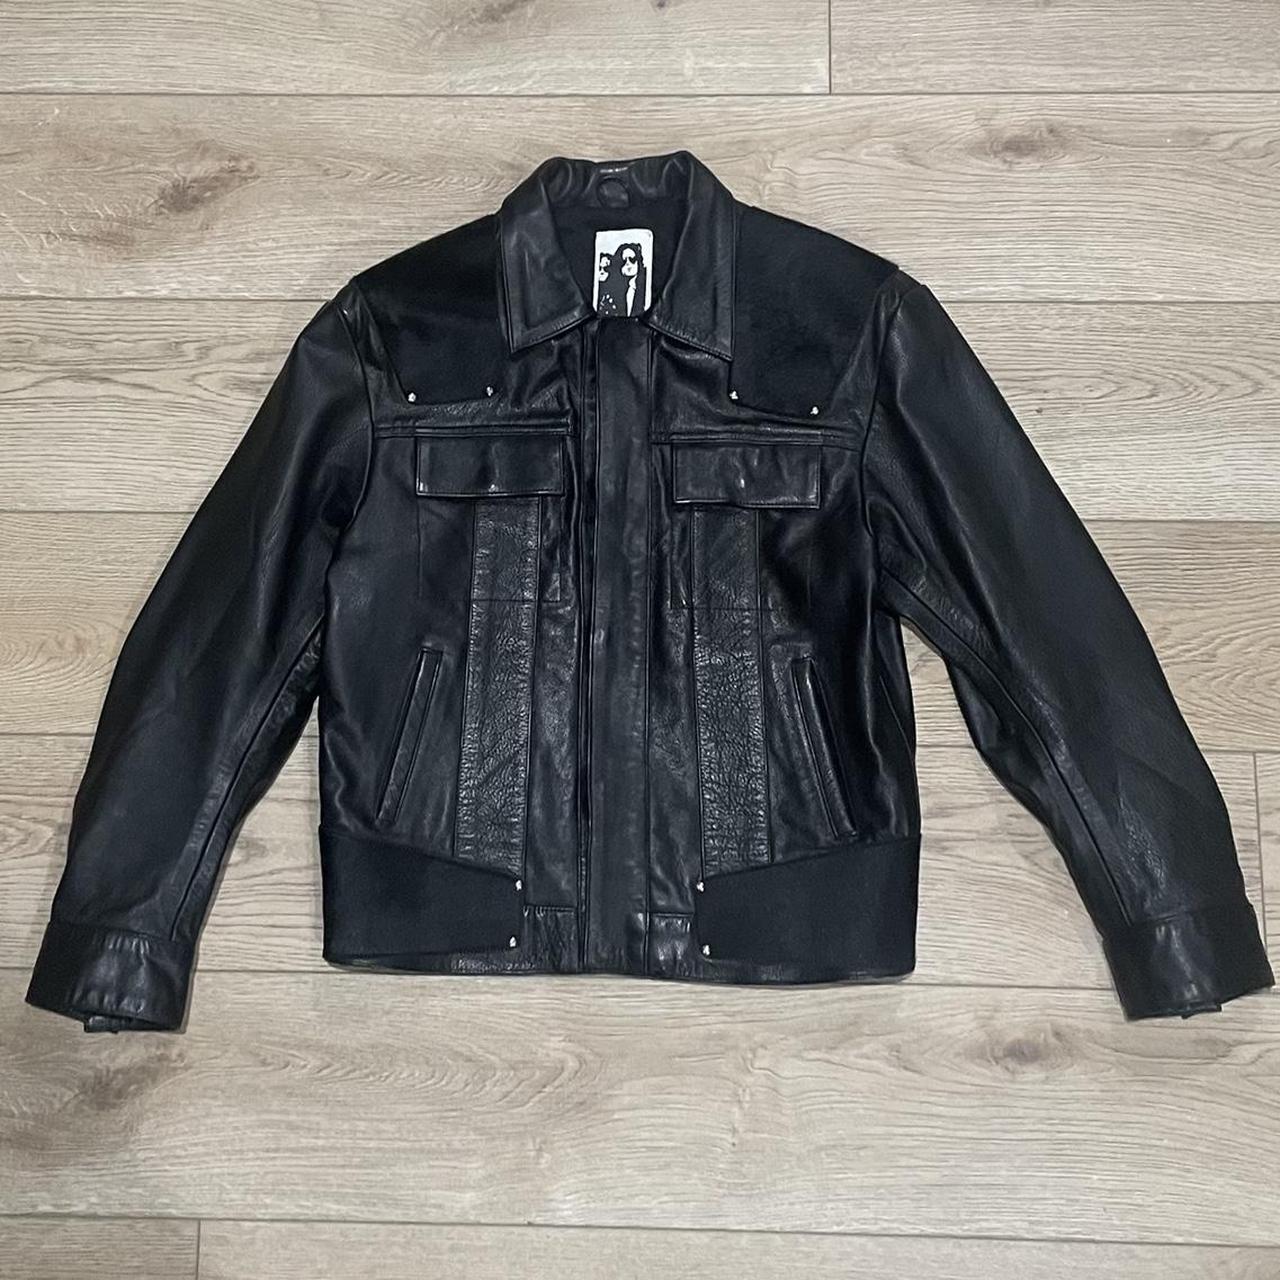 Misere Moderne leather jacket Genuine leather and... - Depop